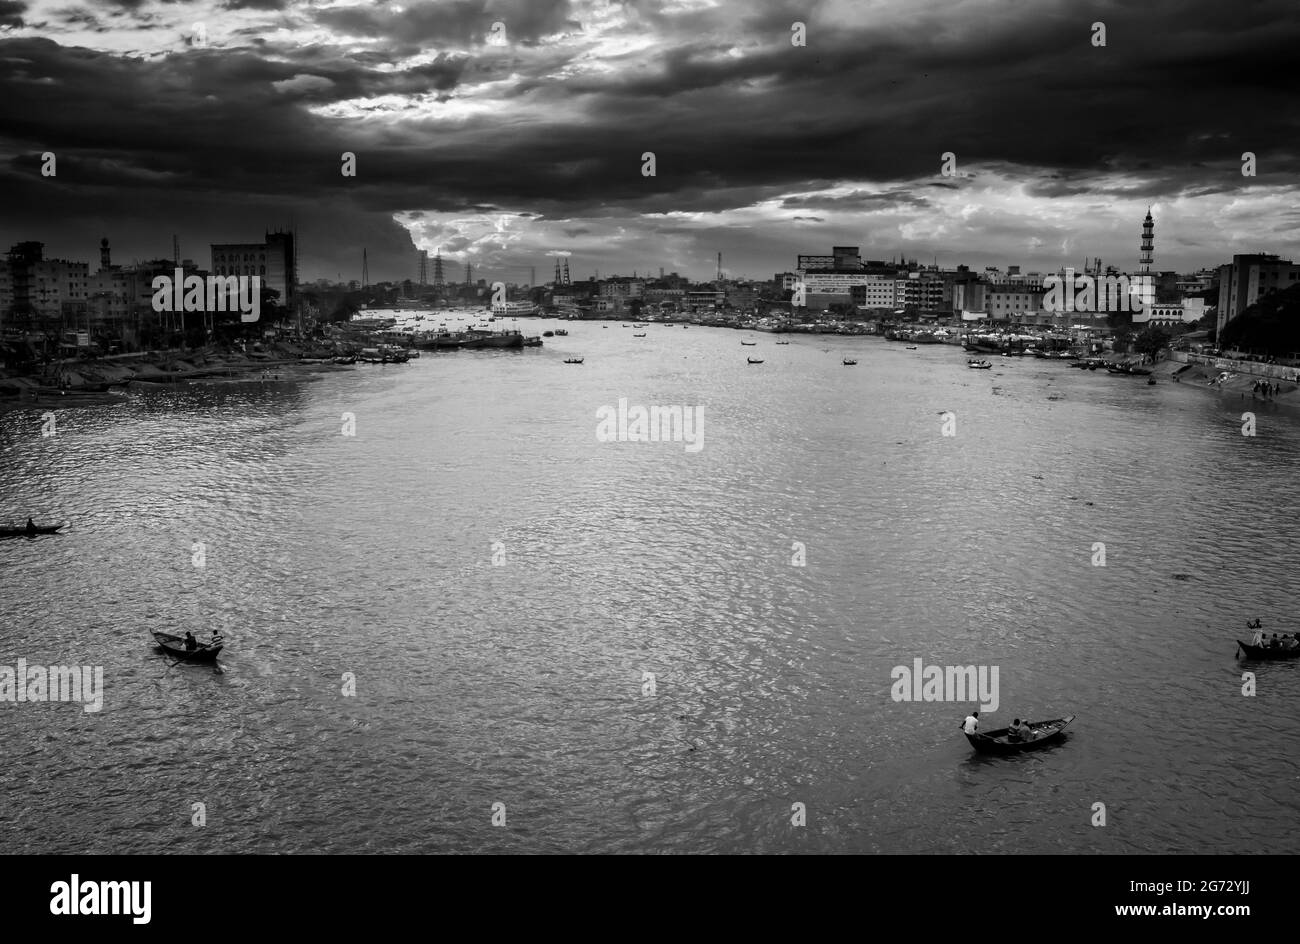 Am 21. Oktober 2020 überwölkt der Himmel über dem Fluss vom Brigongga-Fluss, Dhaka, Bangladesch, Südasien. Stockfoto